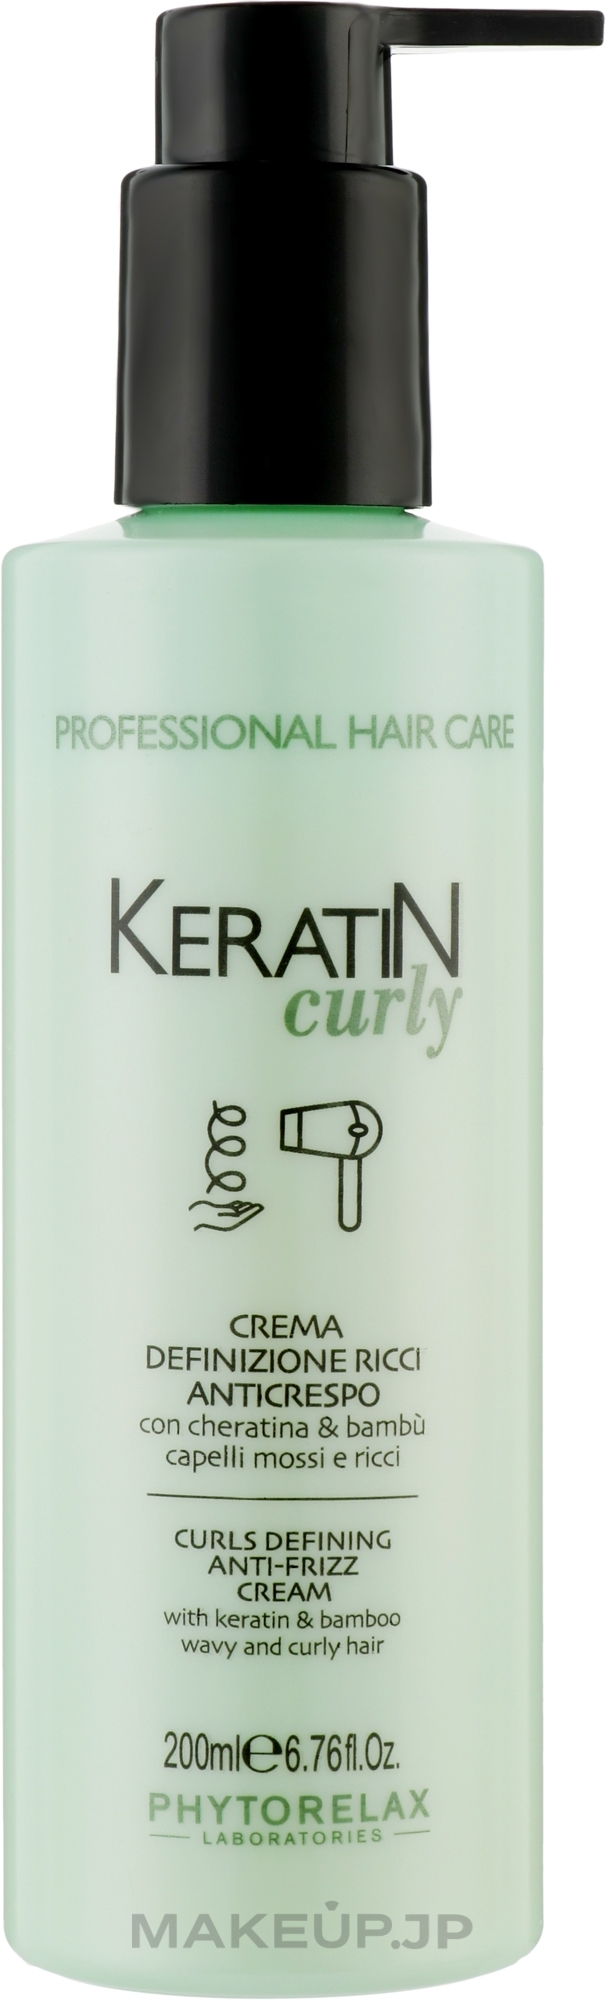 Curl Defining Anti-Frizz Cream - Phytorelax Laboratories Keratin Curly Curls Defining Anti-Frizz Cream — photo 200 ml